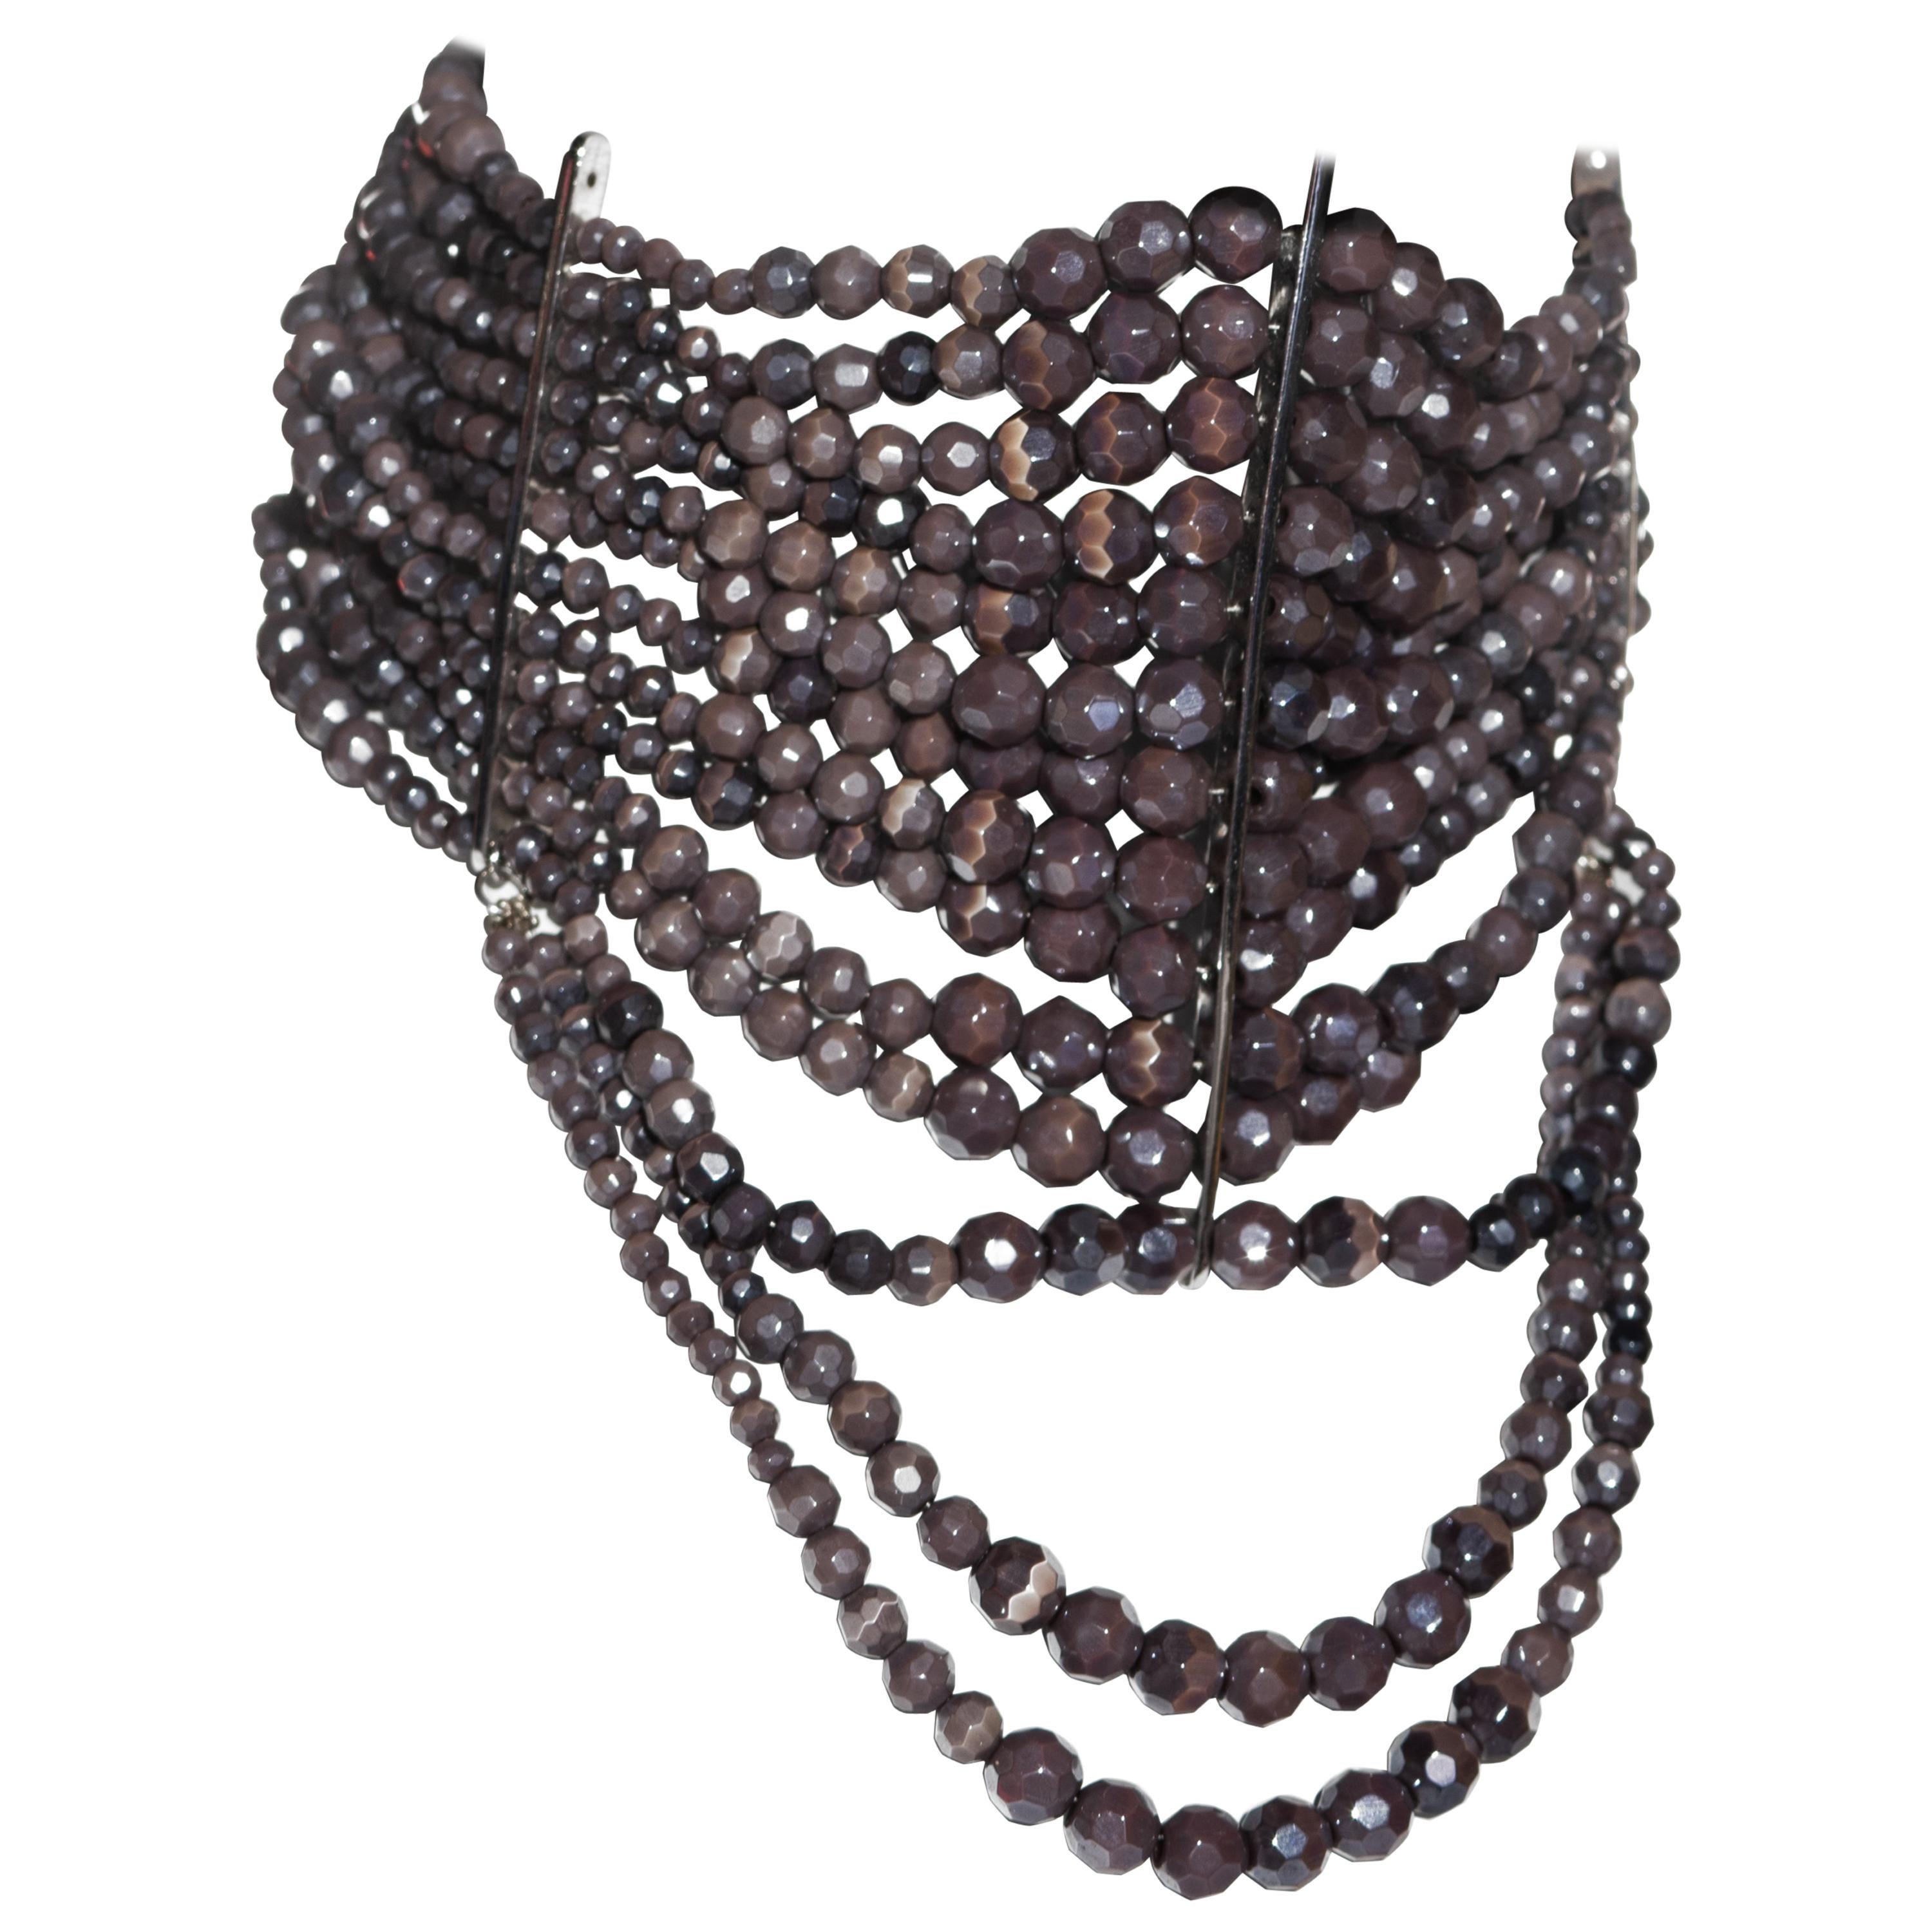 Christian Dior by John Galliano purple bead masai choker necklace, ss 1998